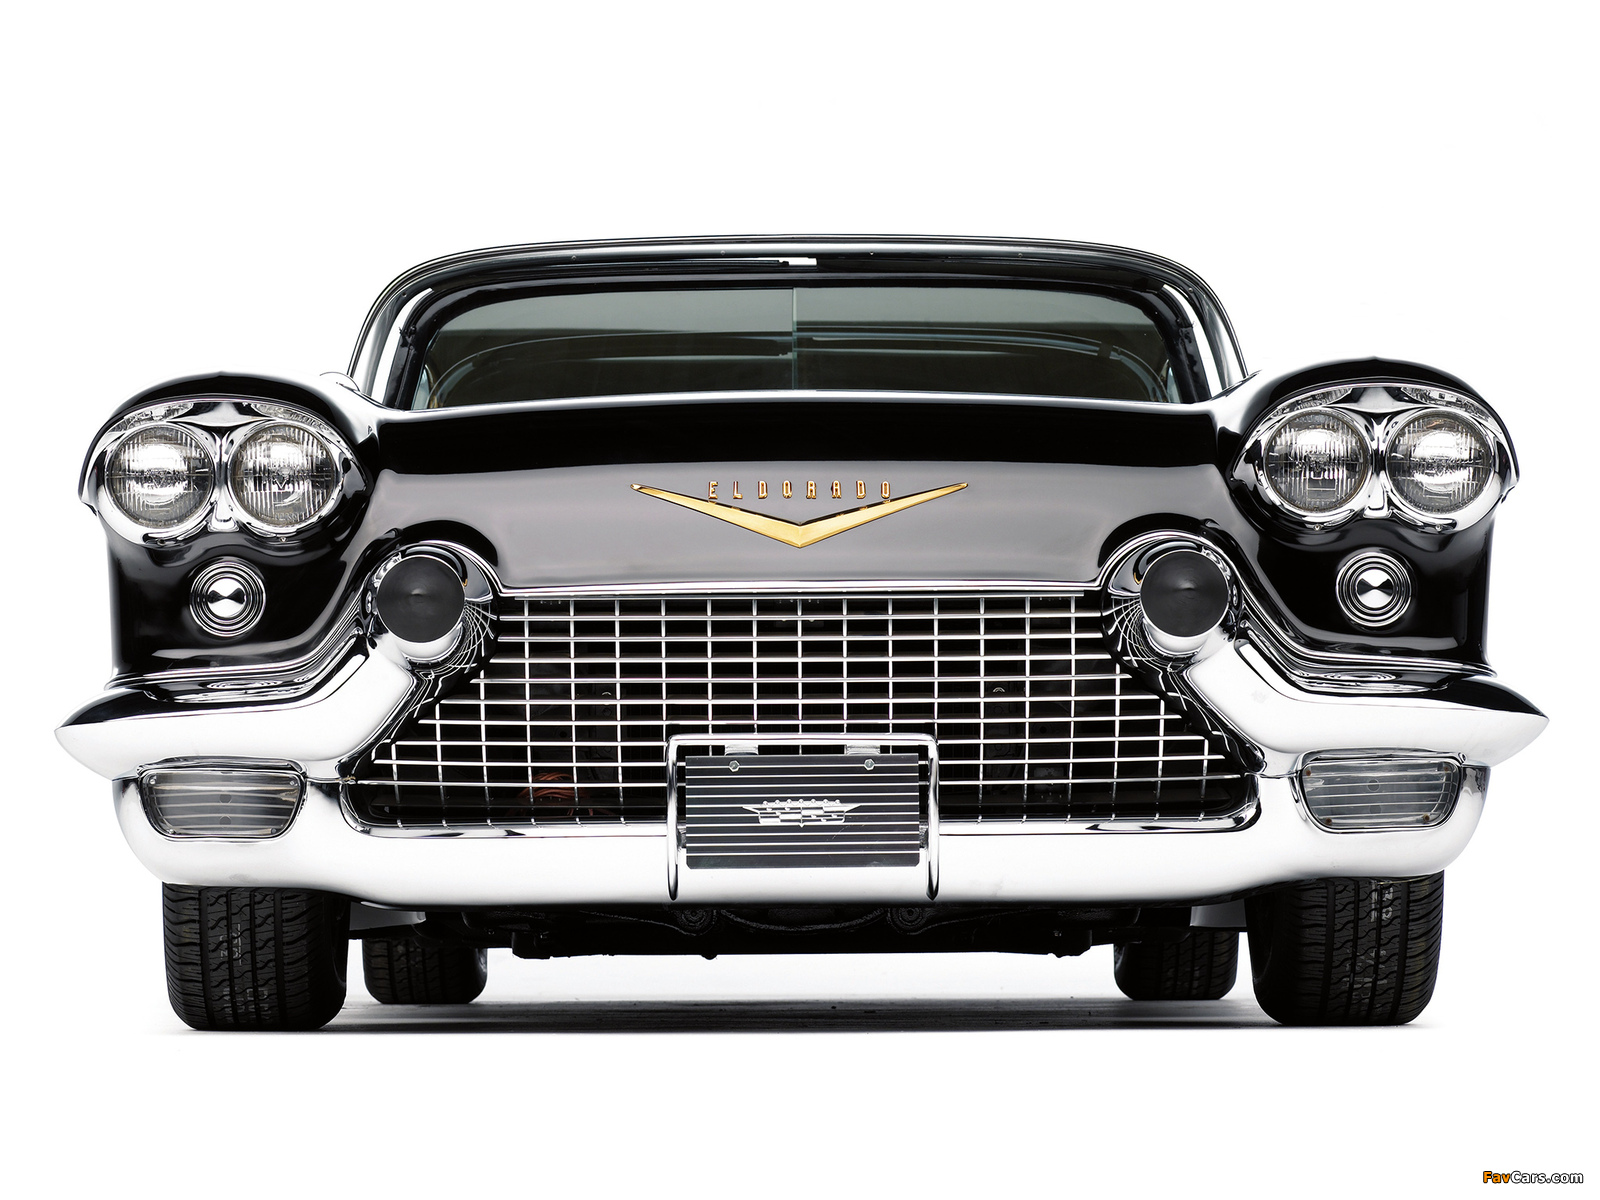 Images of Cadillac Eldorado Brougham Town Car Show Car 1956 (1600 x 1200)